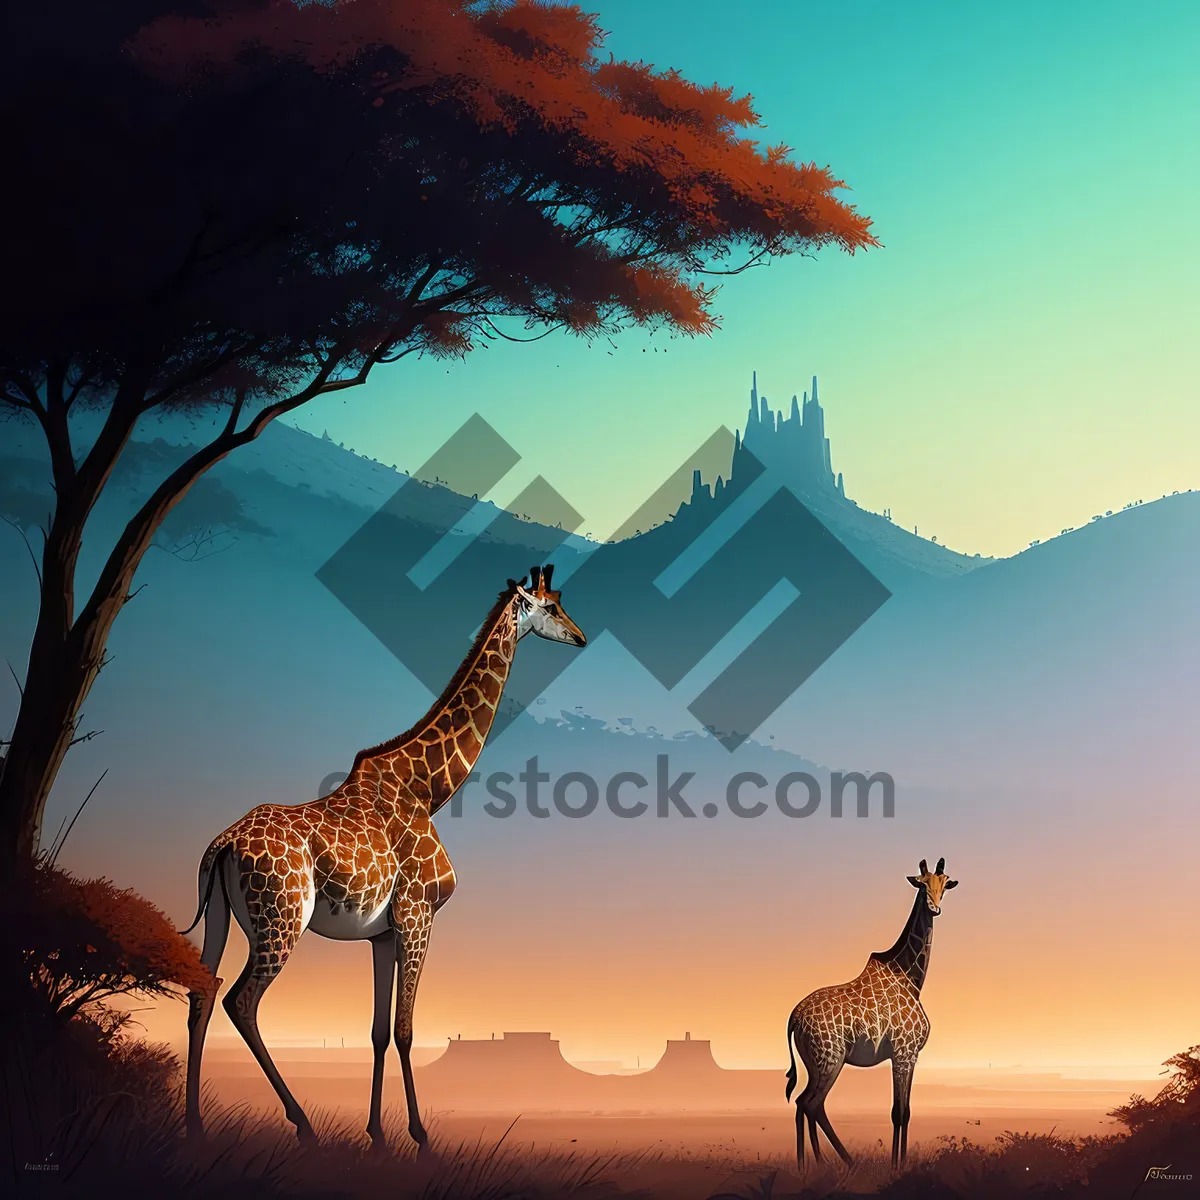 Picture of Majestic Safari: The Graceful Giraffe in the Wild